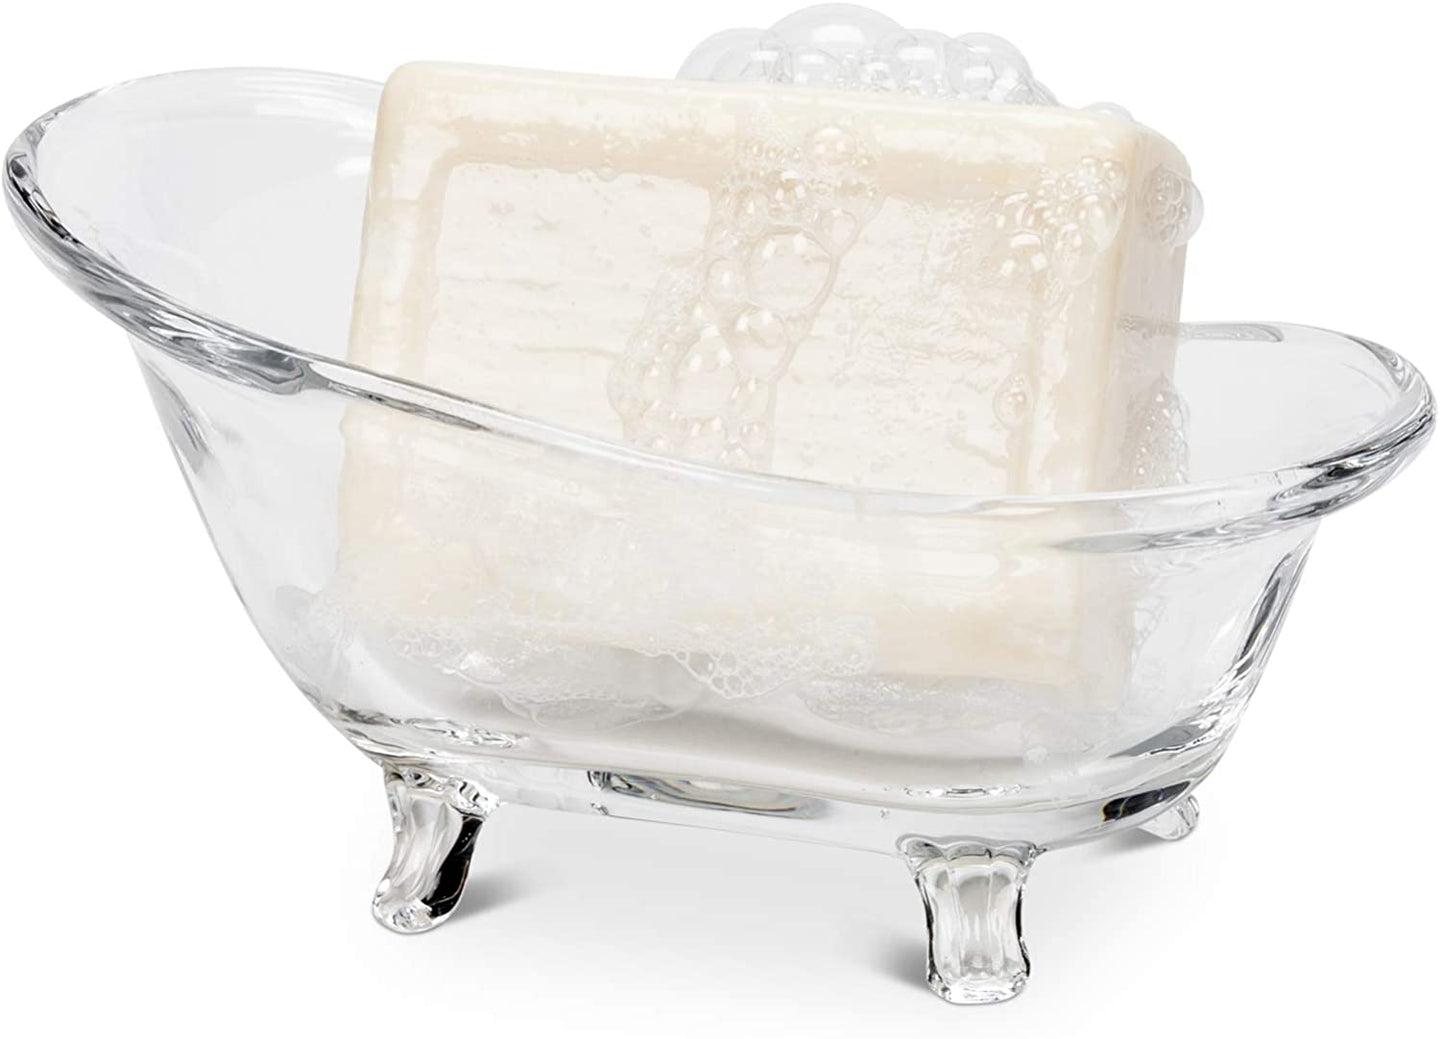 Soap dish - glass bathtub